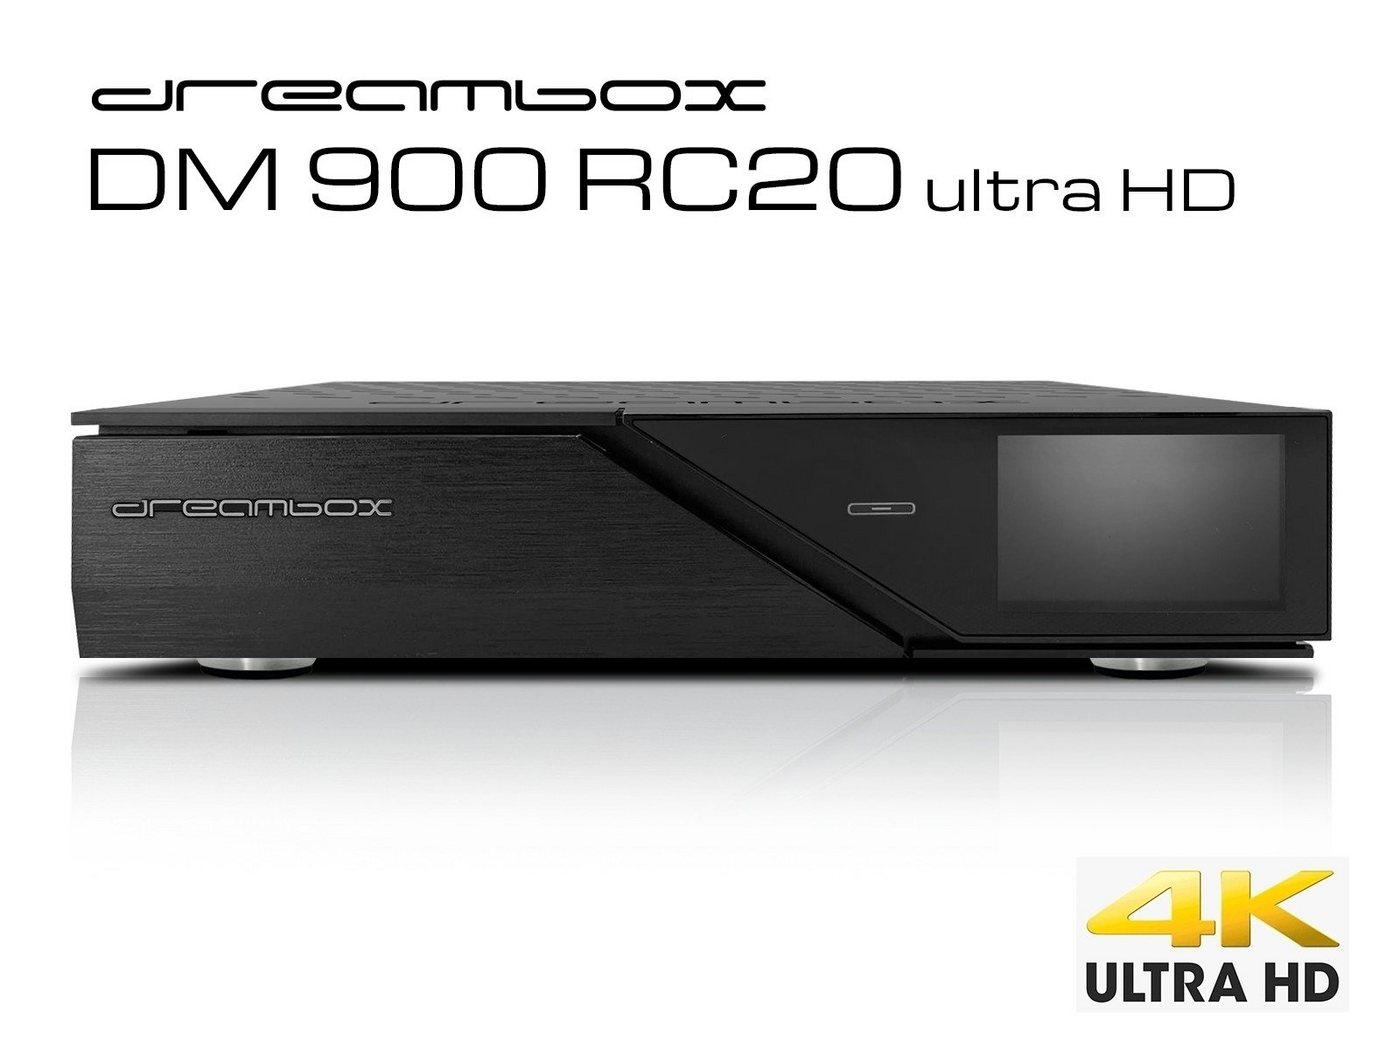 Dreambox Dreambox DM900 RC20 UHD 4K 1x DVB-S2X FBC MS Twin Tuner E2 Linux PVR Satellitenreceiver von Dreambox